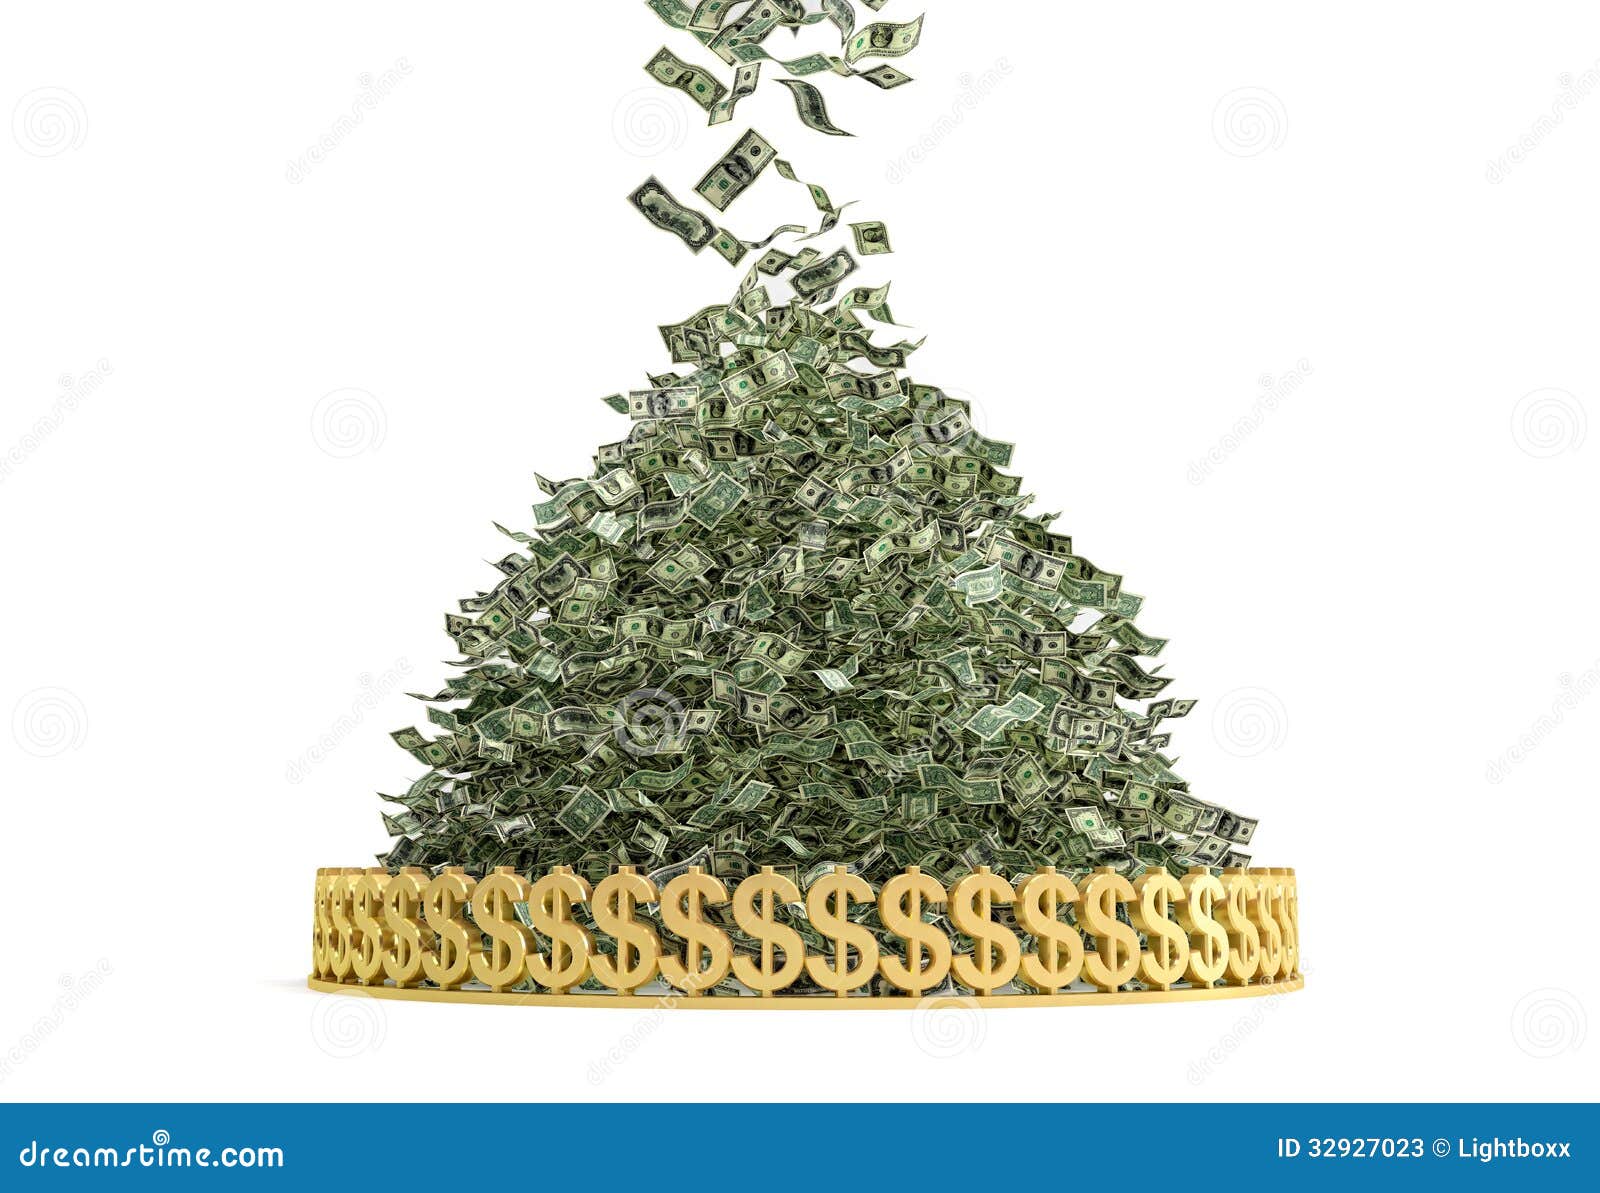 money-rain-pile-cash-raining-down-32927023.jpg